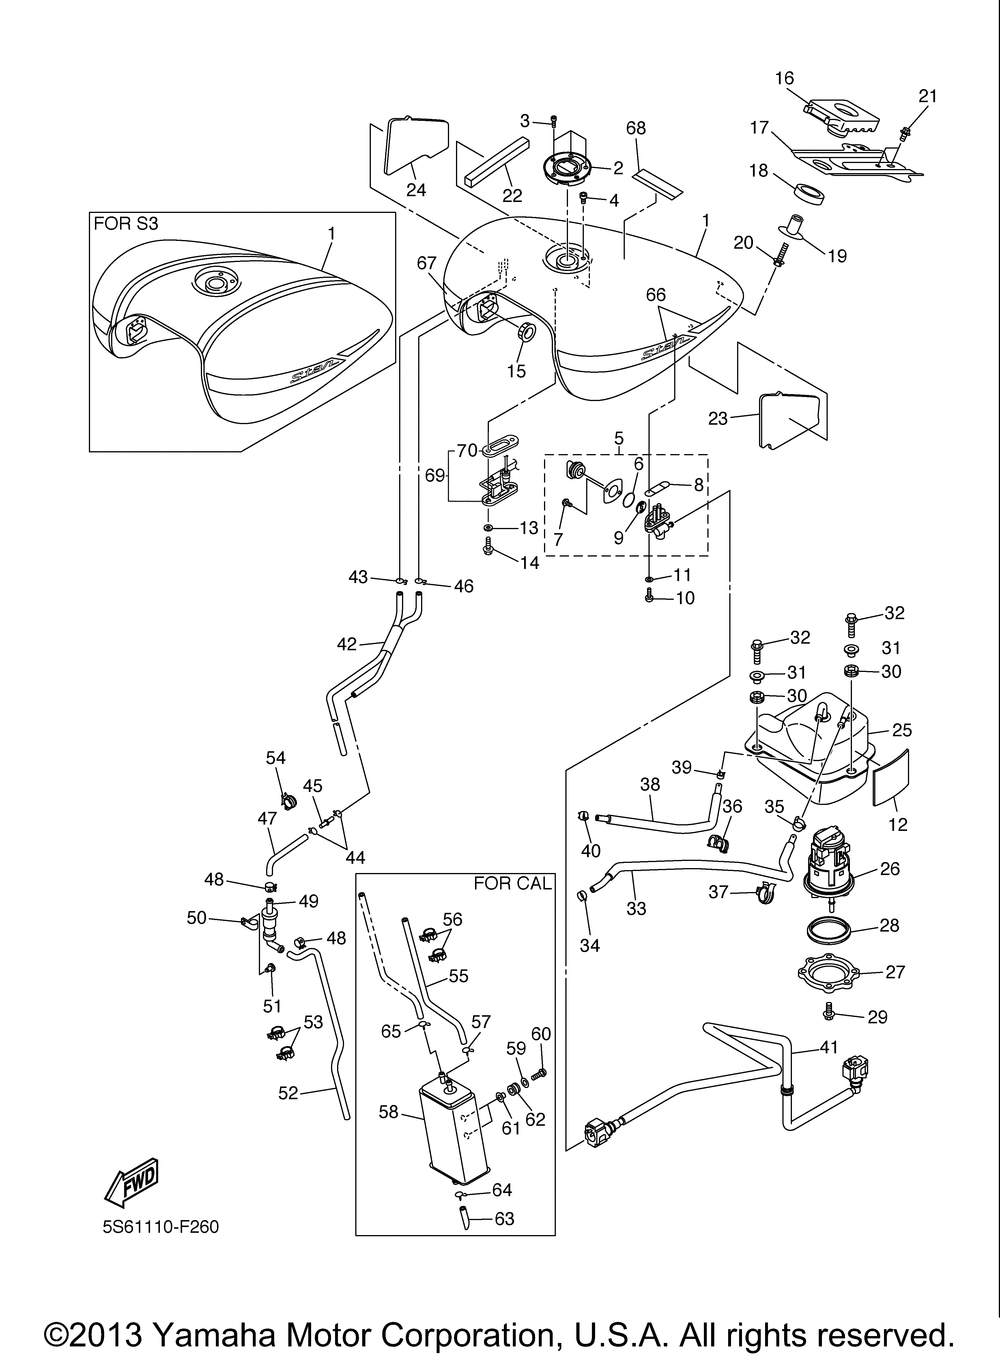 2007 Yamaha Motorcycles Parts-Finder Diagrams | Marionville 